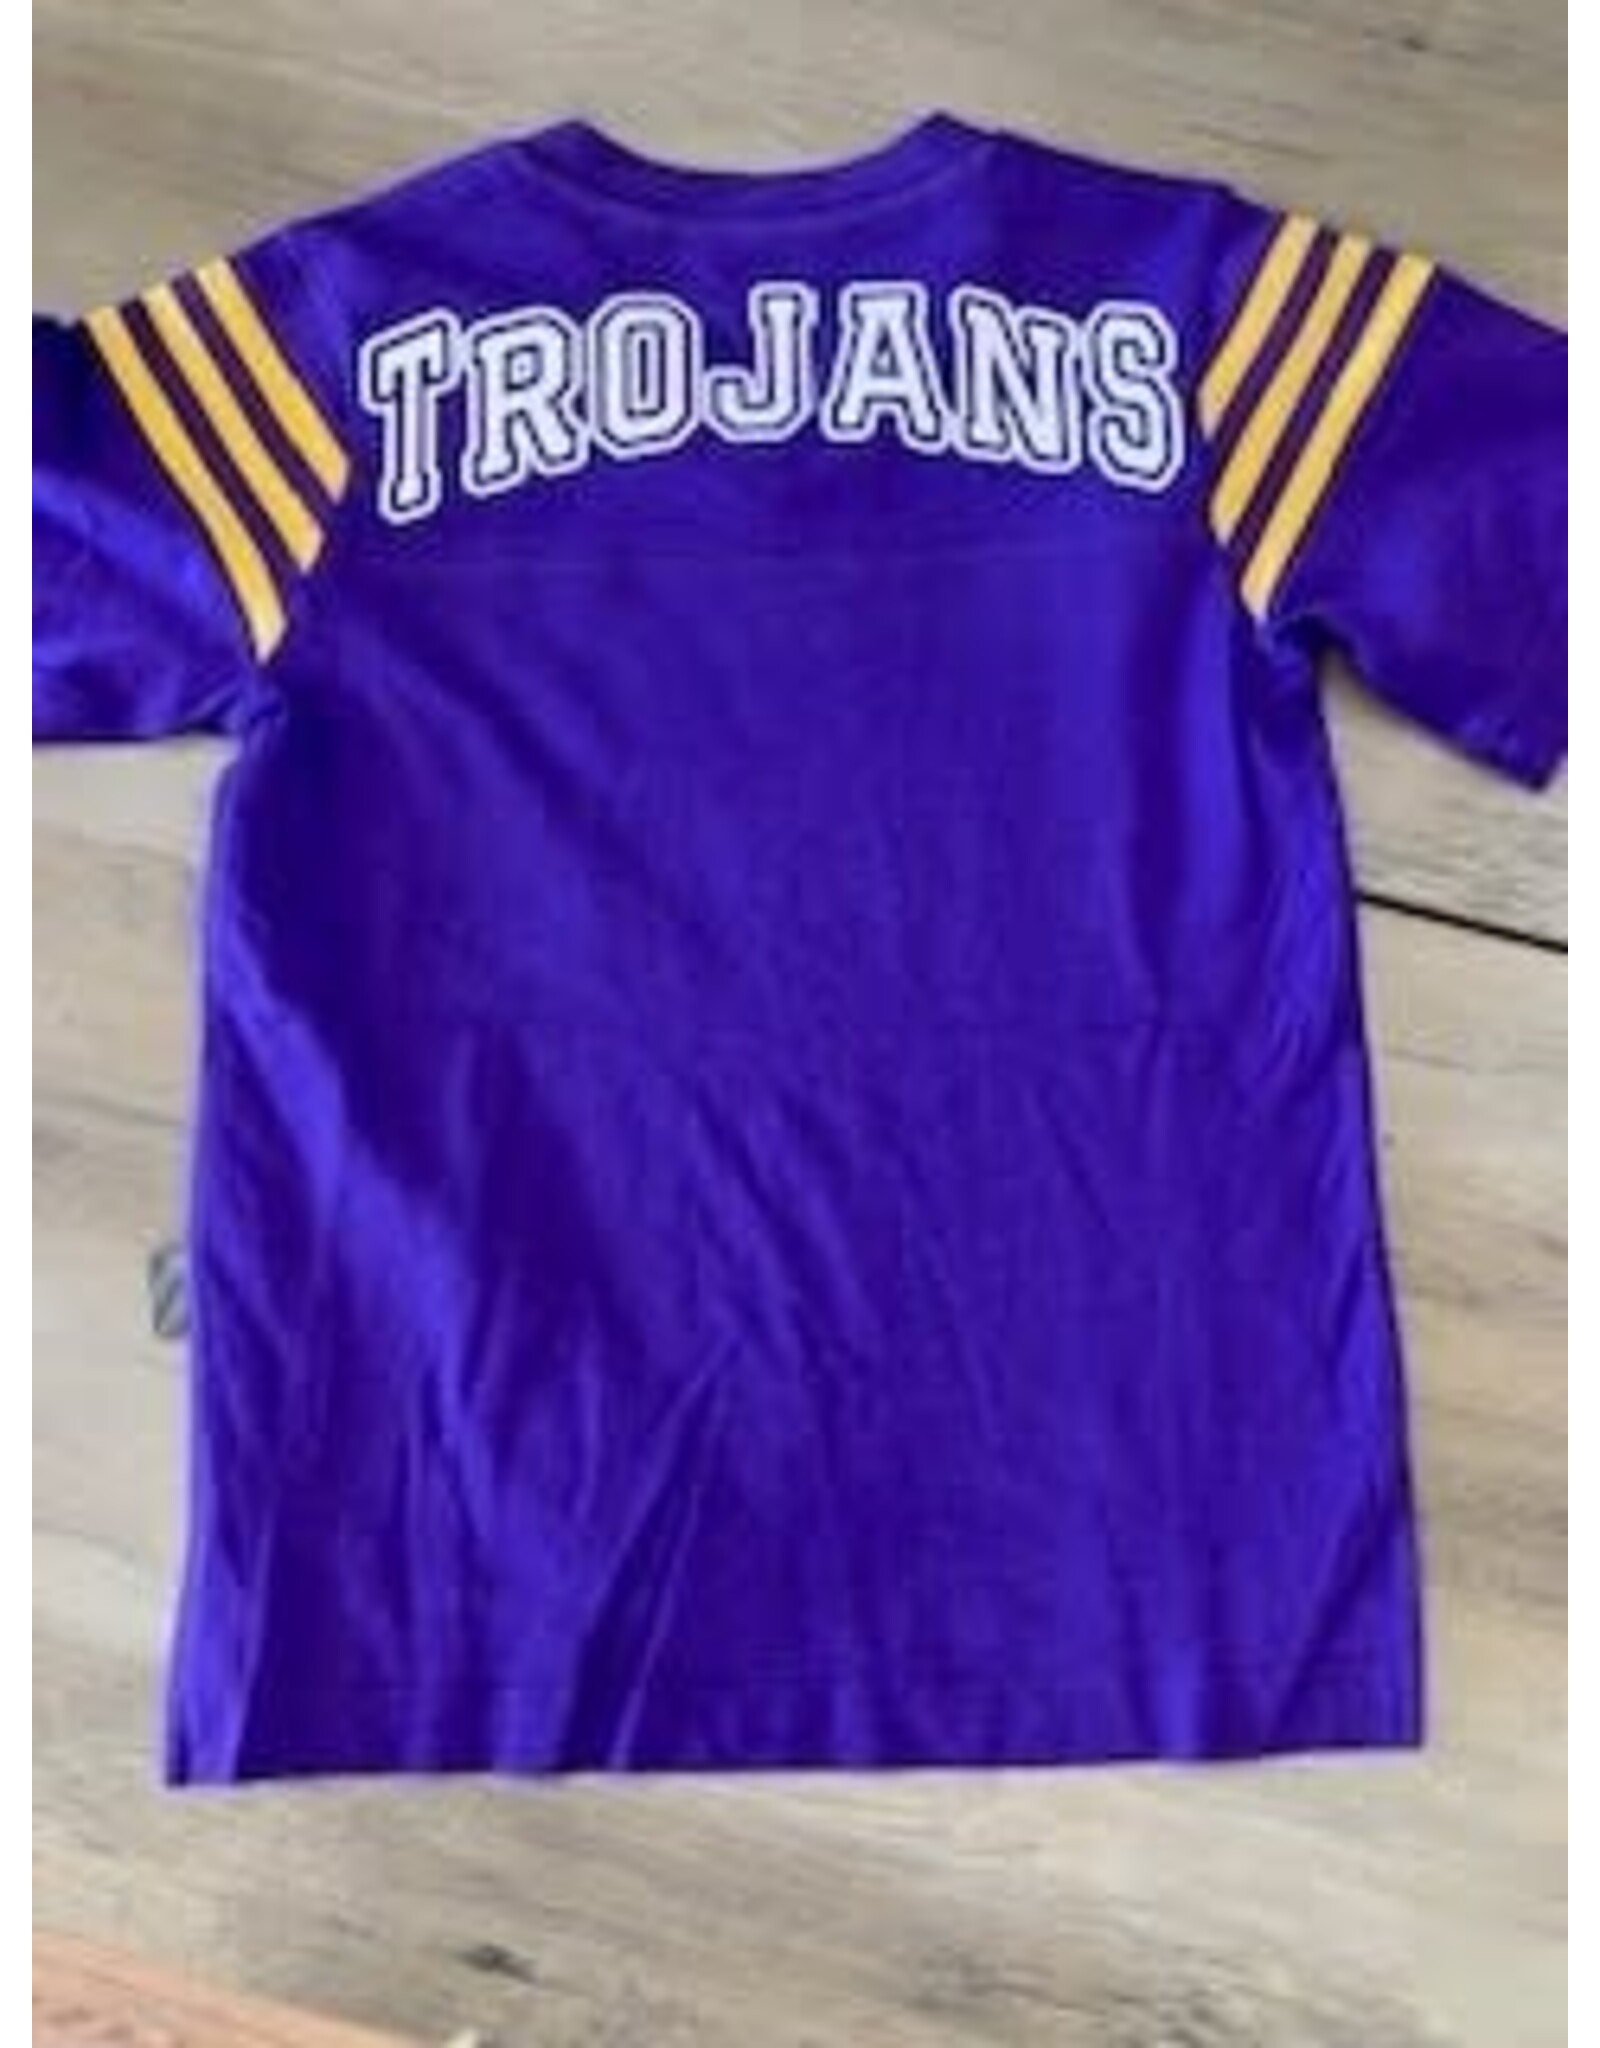 Purple & Gold Ash jersey TROJANS